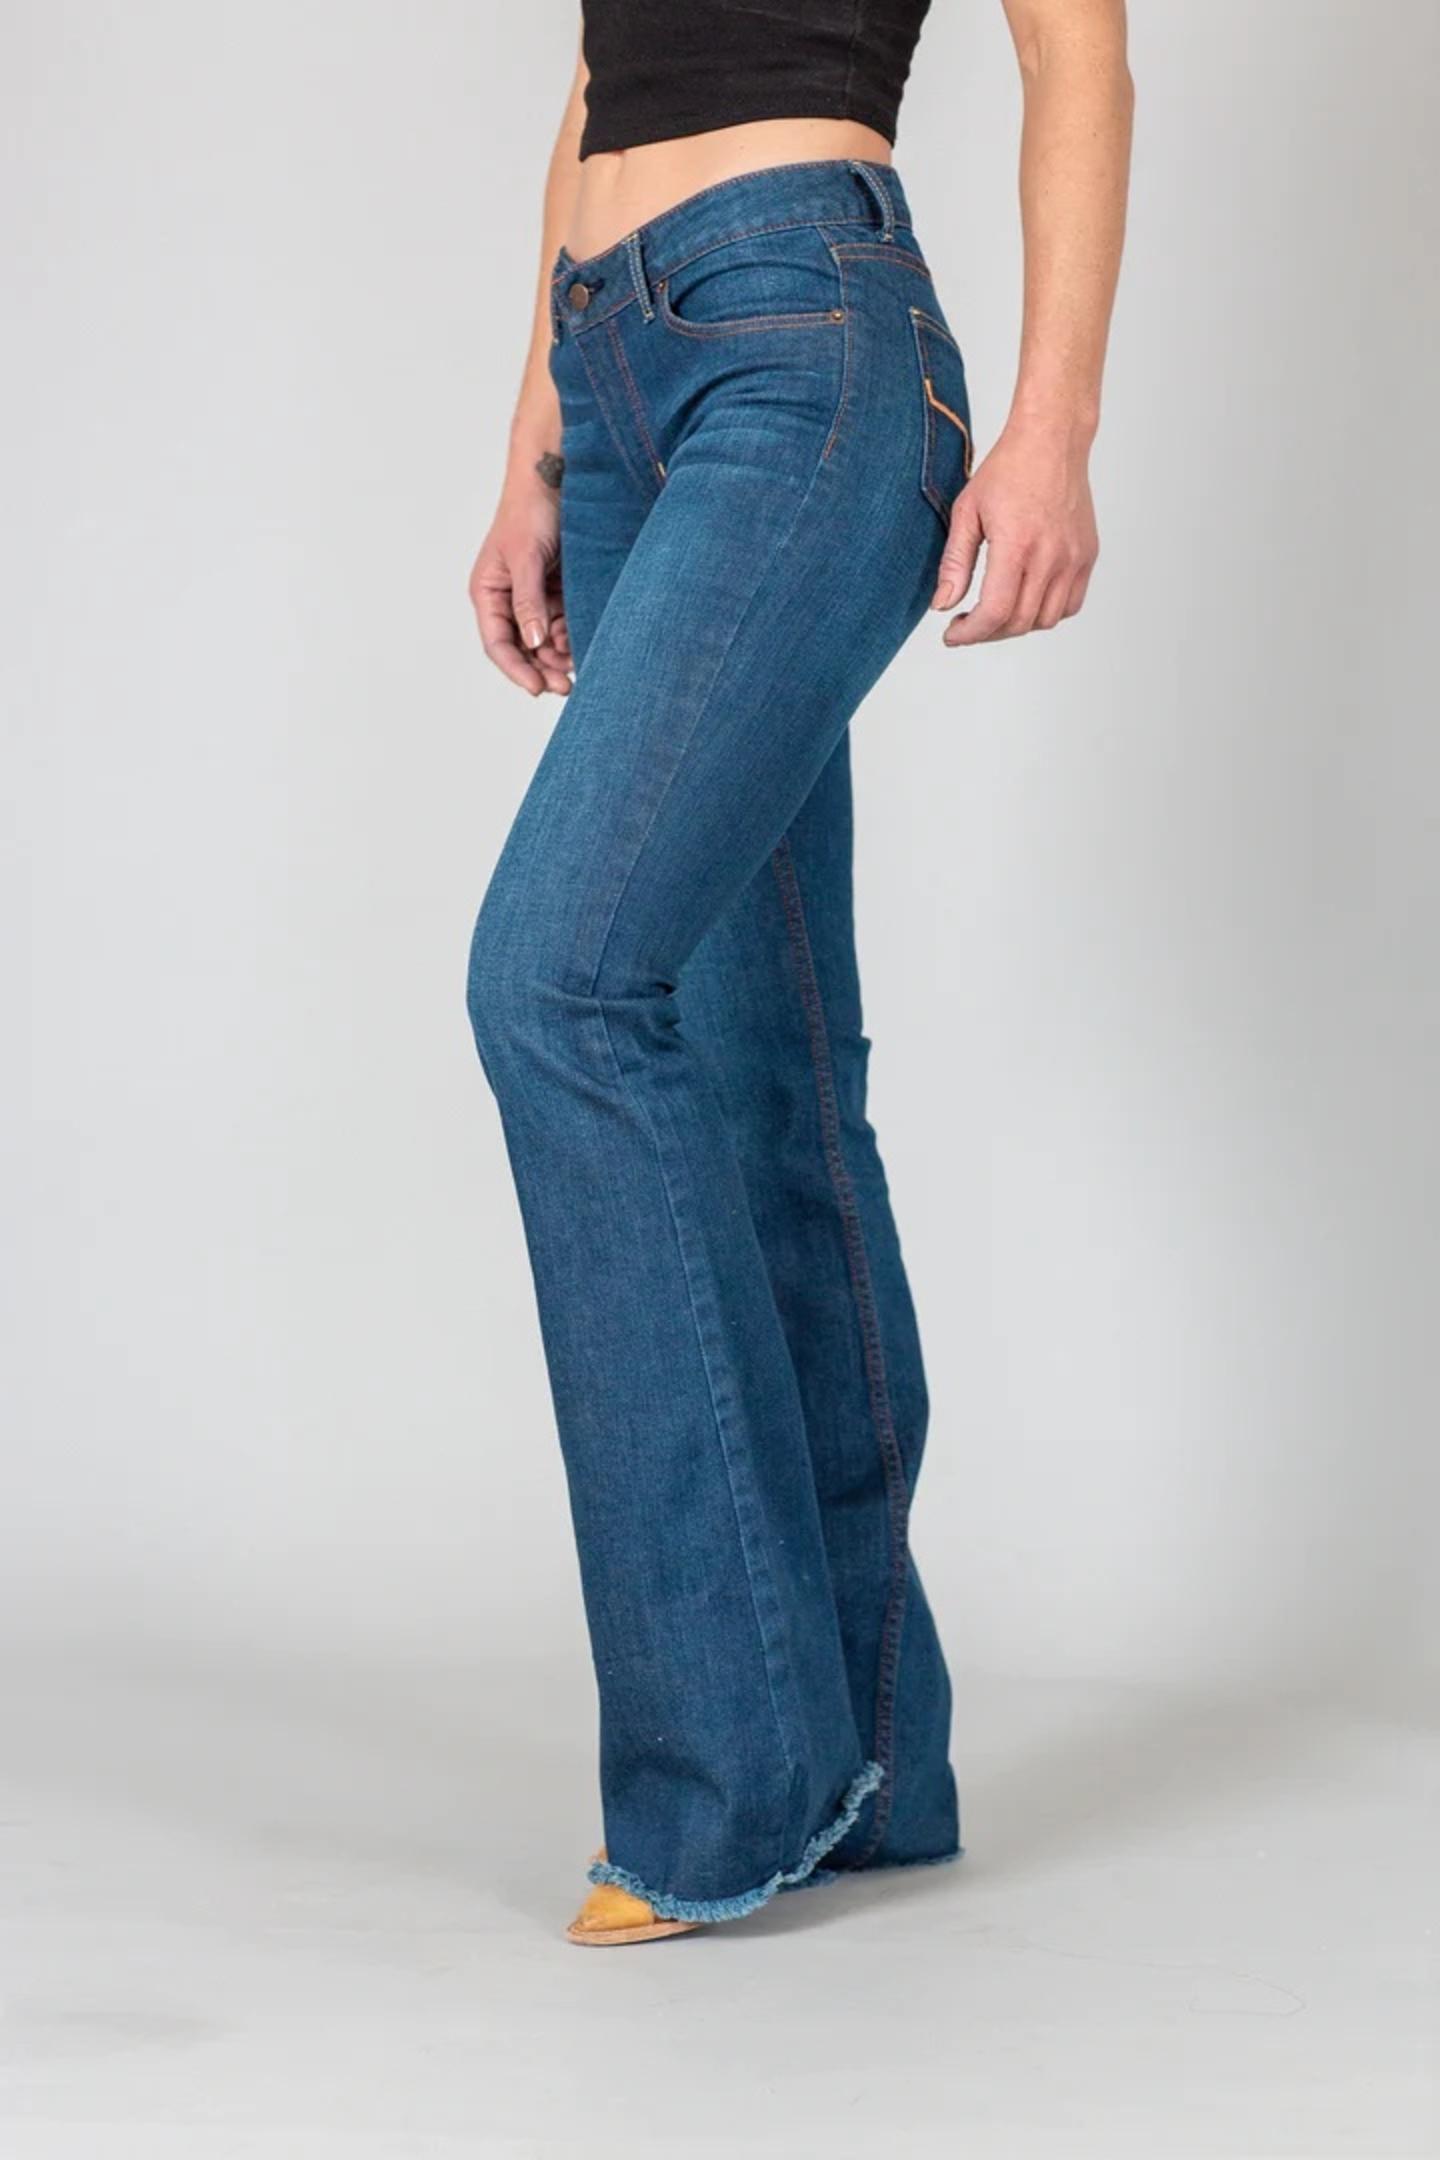 Kimes Ranch Women's Lola Raw Hem Blue Jeans